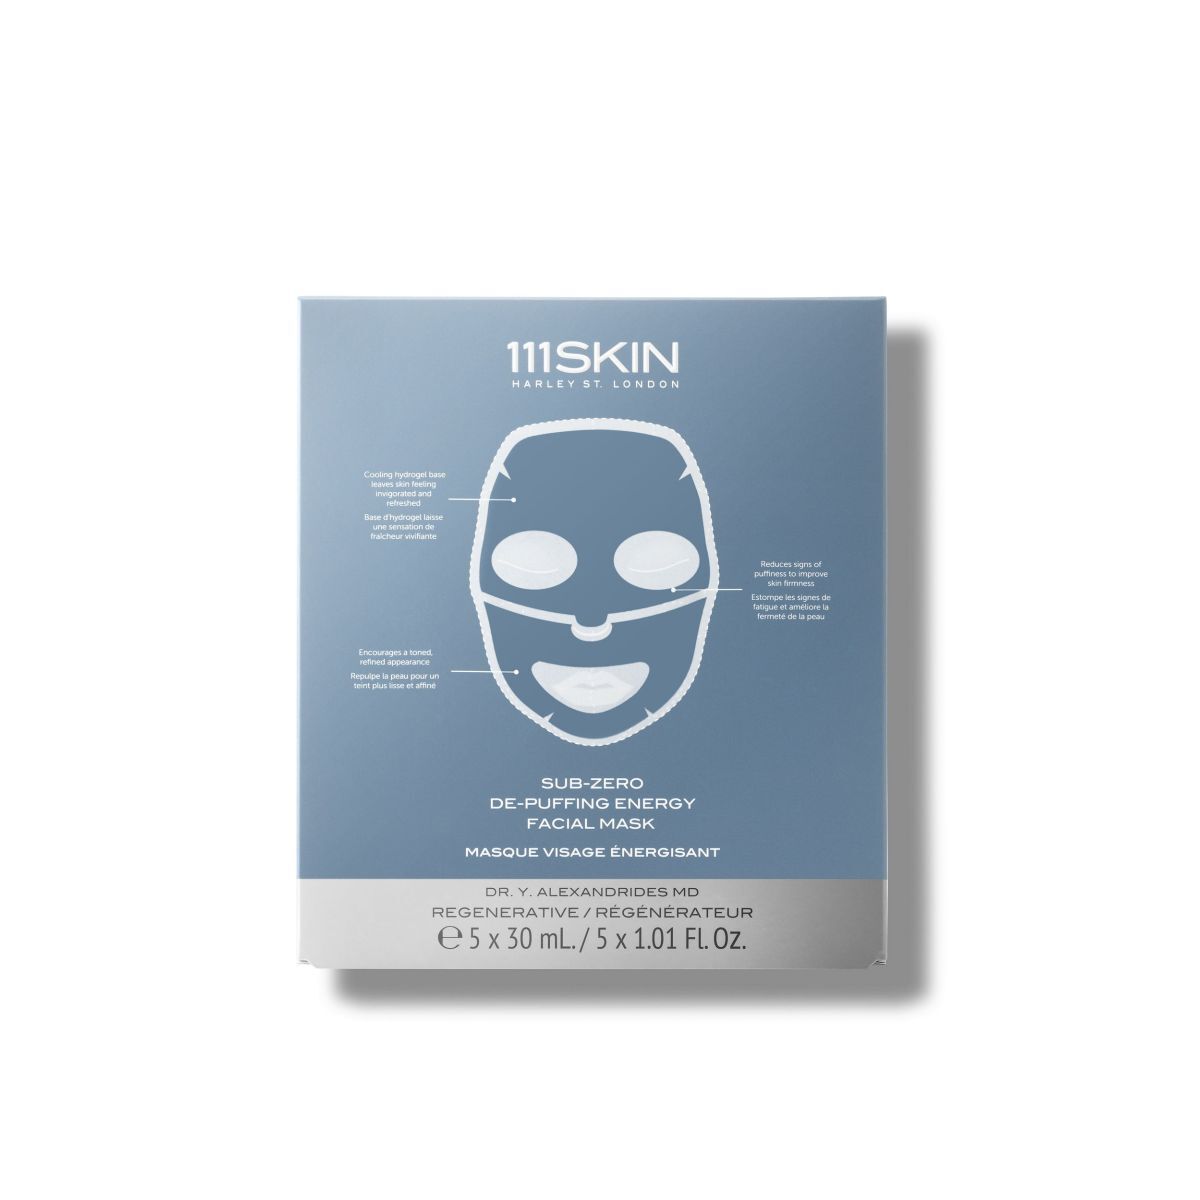 111SKIN Sub Zero De-puffing Energy Mask Box 5 X 30